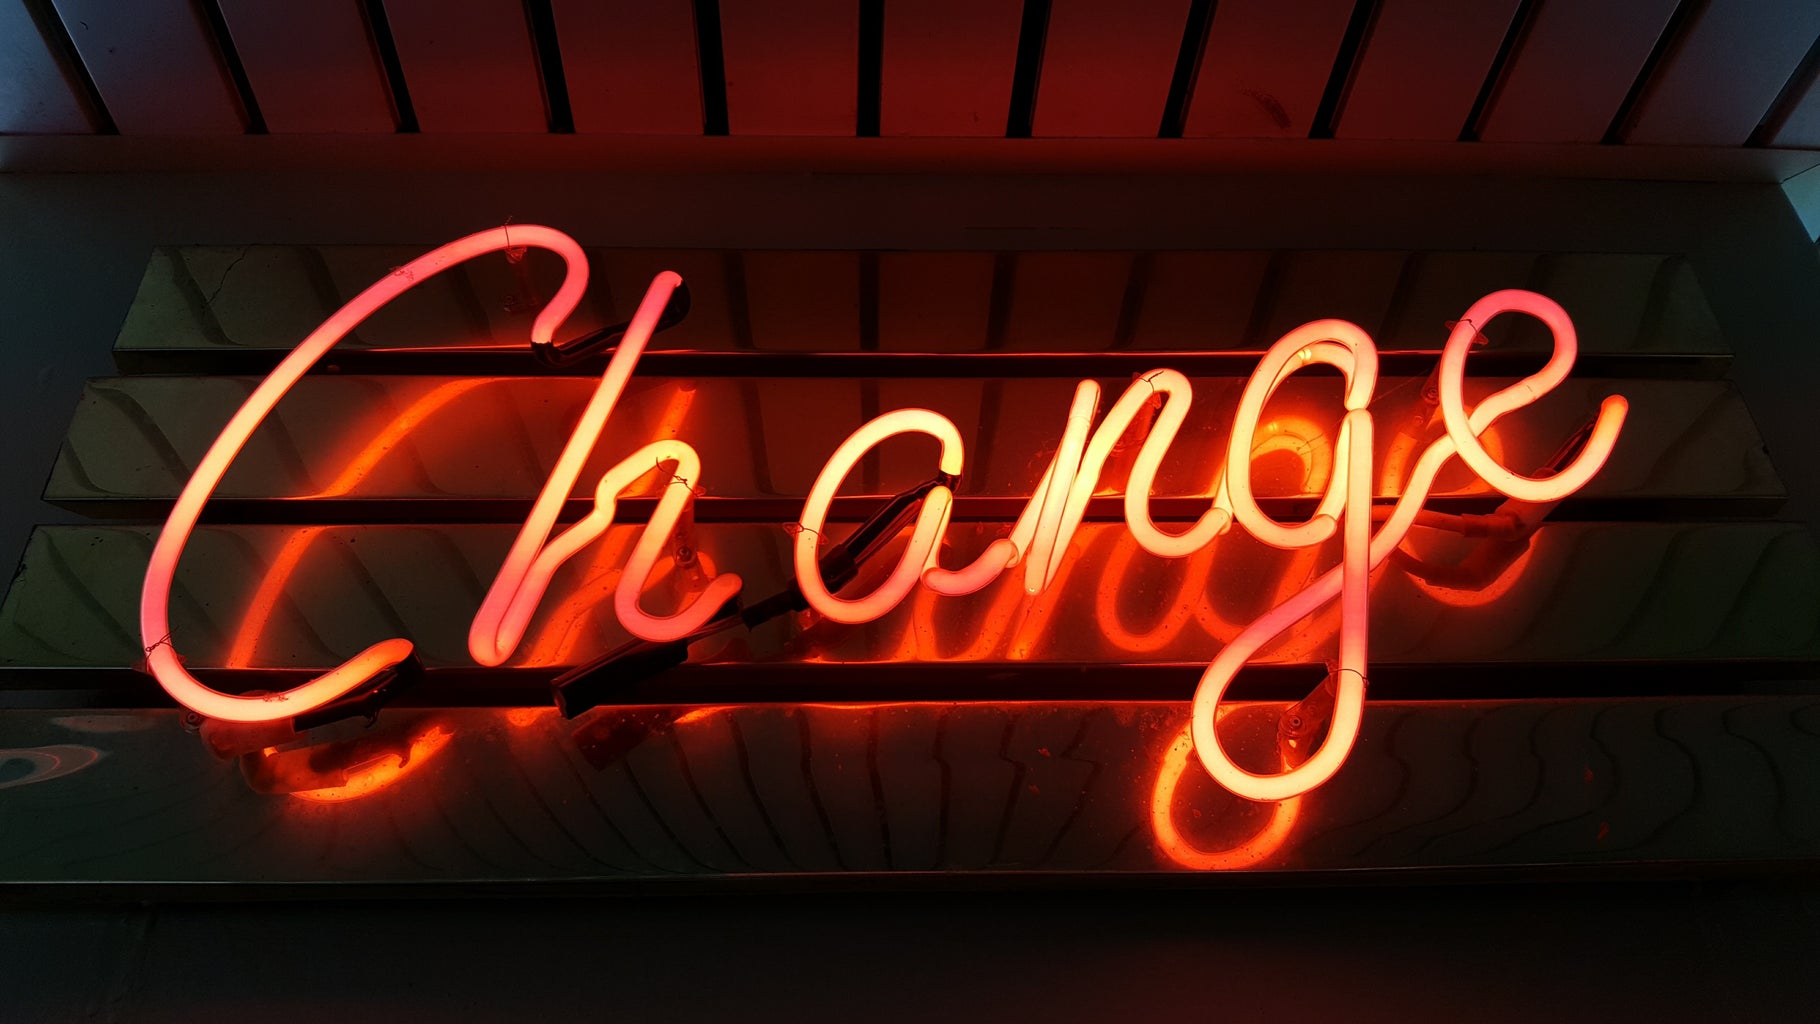 \'Change\' in an orange neon sign